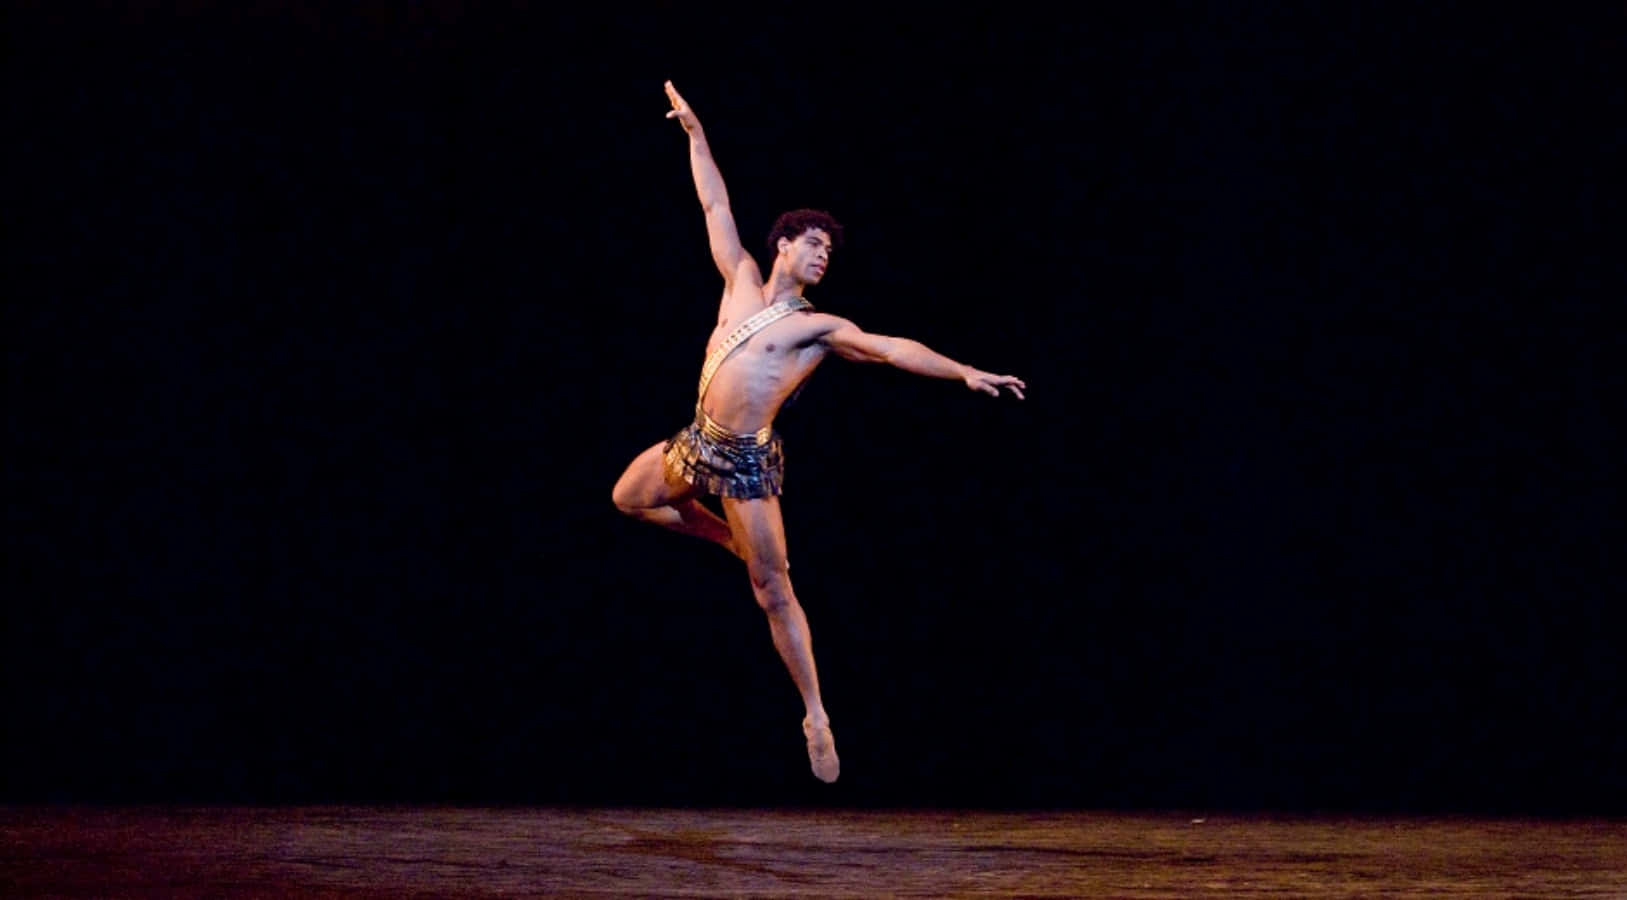 Bildav En Manlig Balettdansare